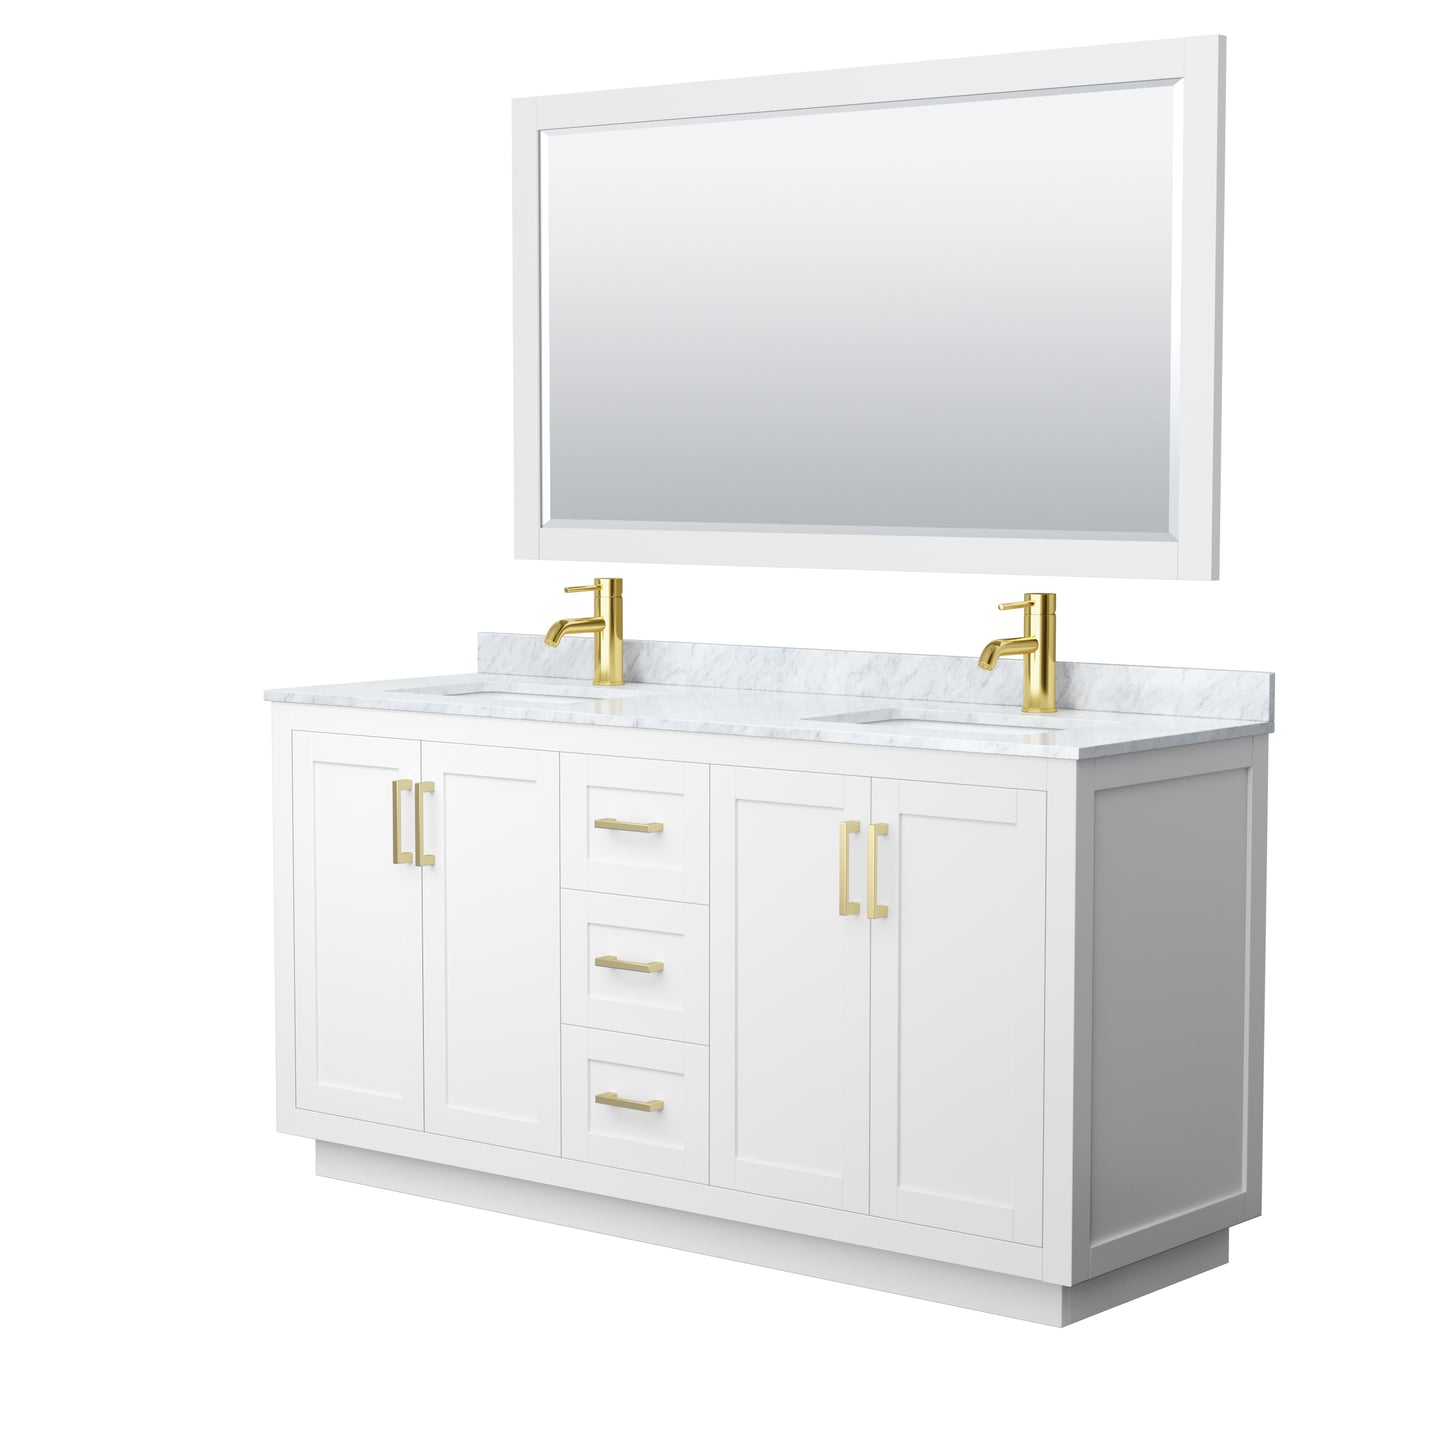 Wyndham Miranda 66 Inch Double Bathroom Vanity in White Carrara Marble Countertop with Undermount Square Sinks and Trim - Luxe Bathroom Vanities